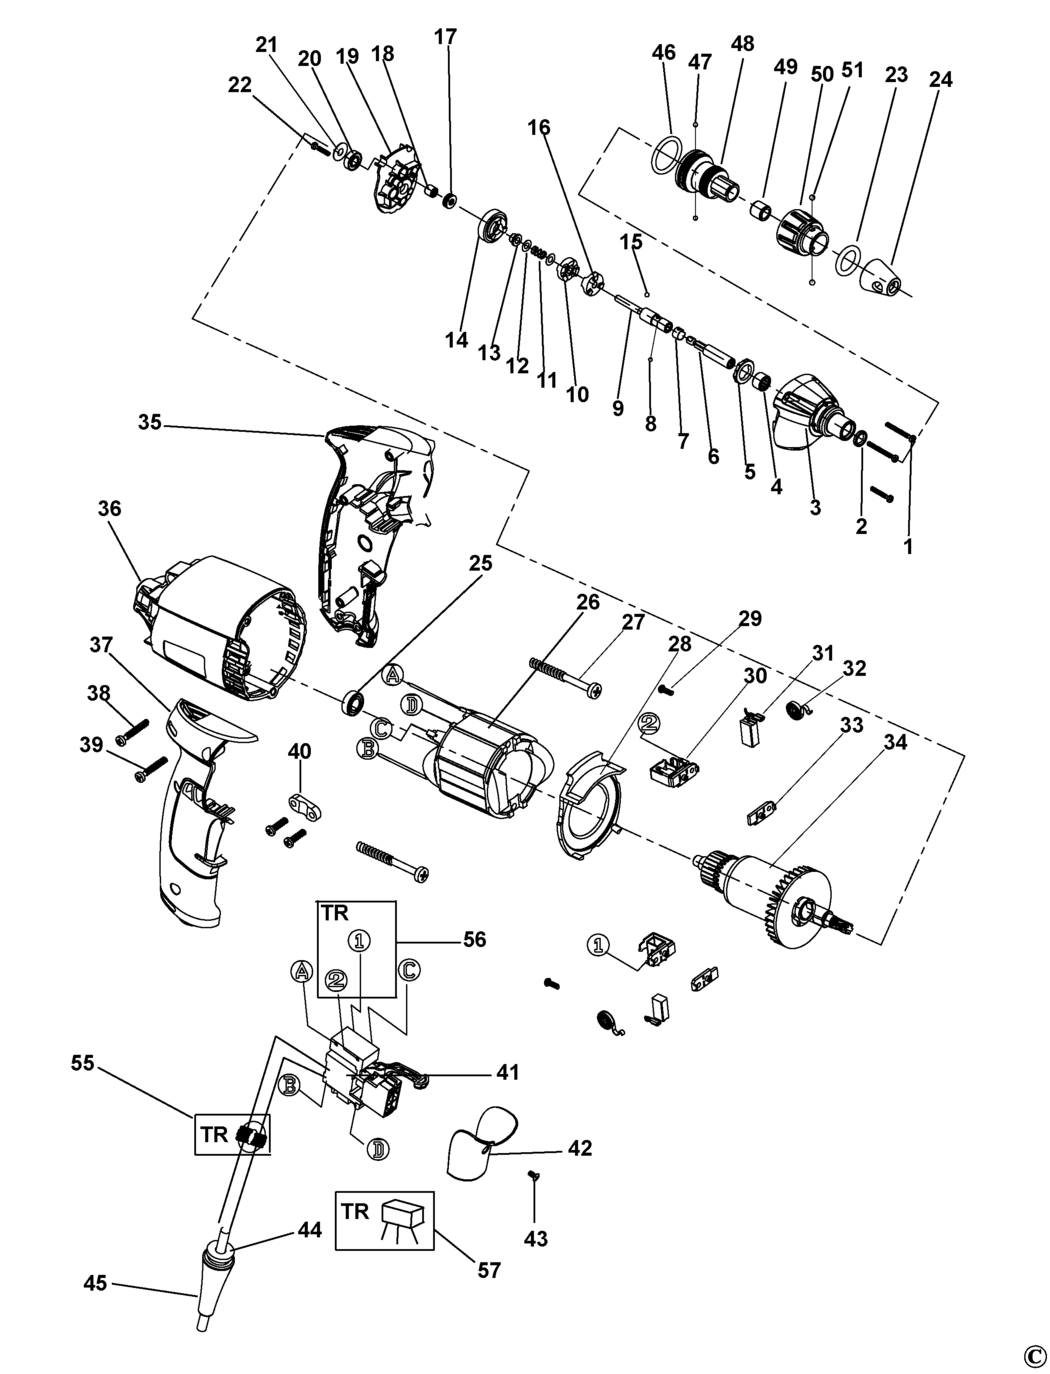 Stanley STDR5206 Type 1 Screwdriver Spare Parts